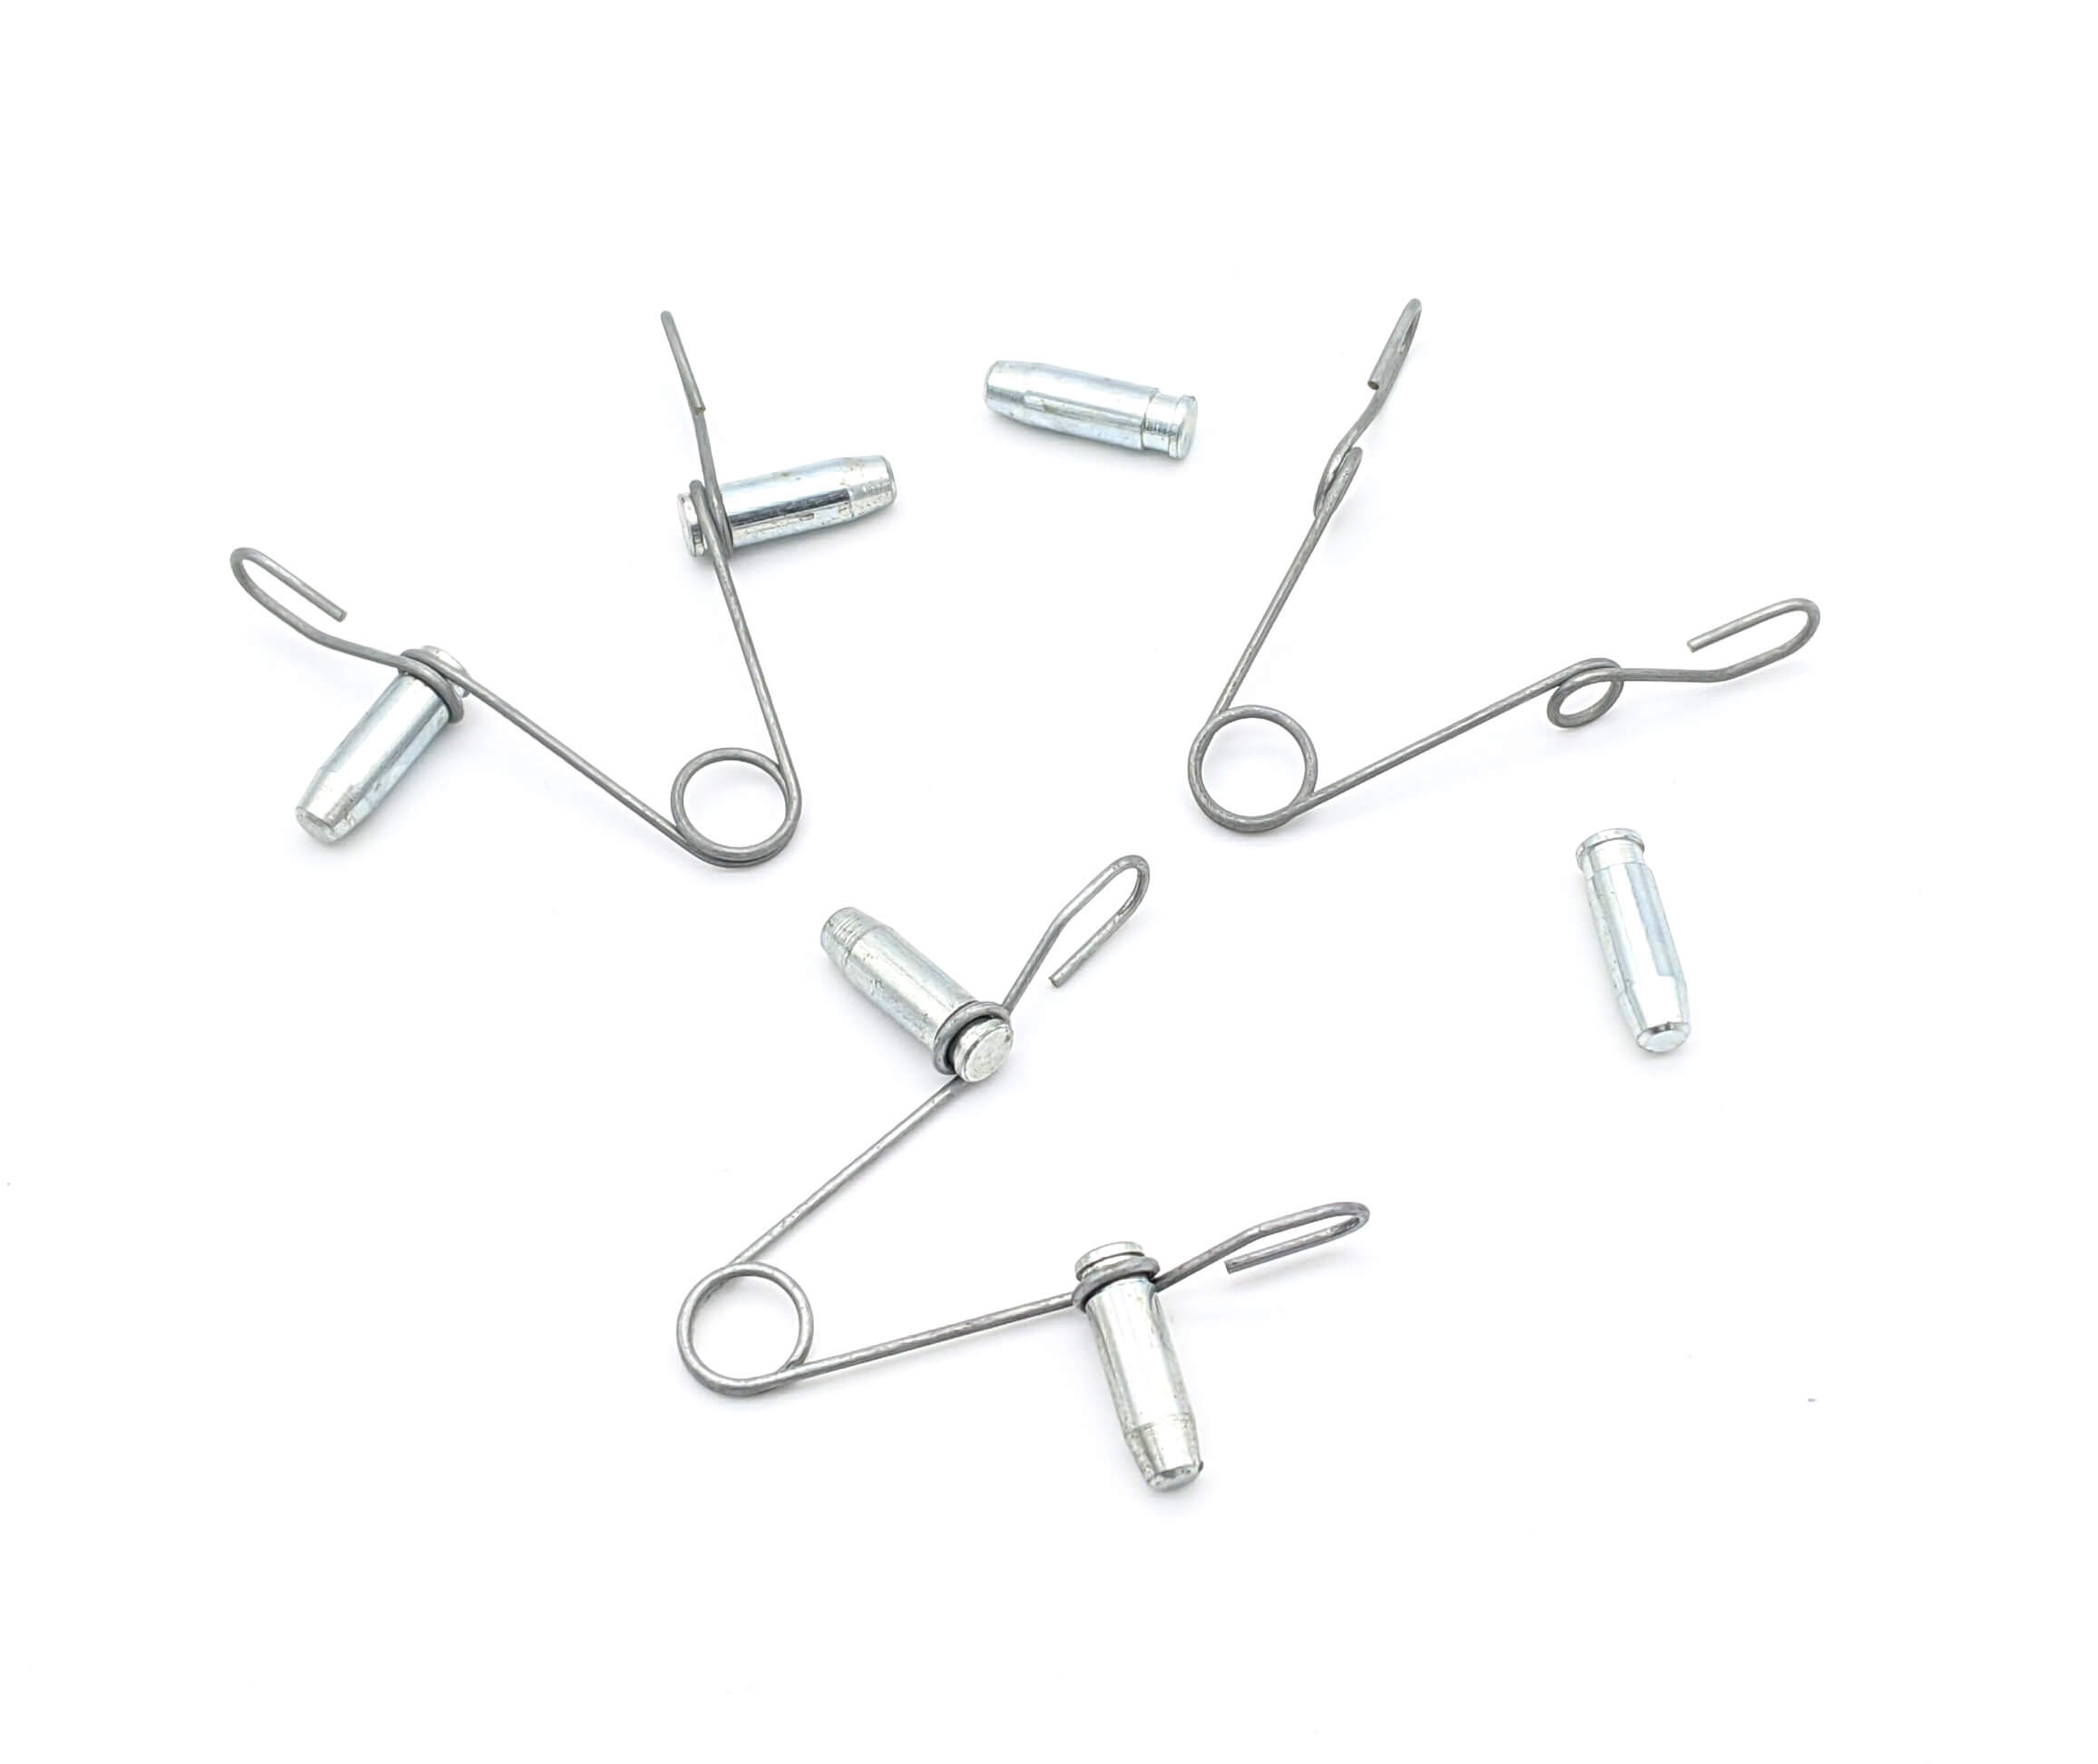 Torsion spring pin assembly